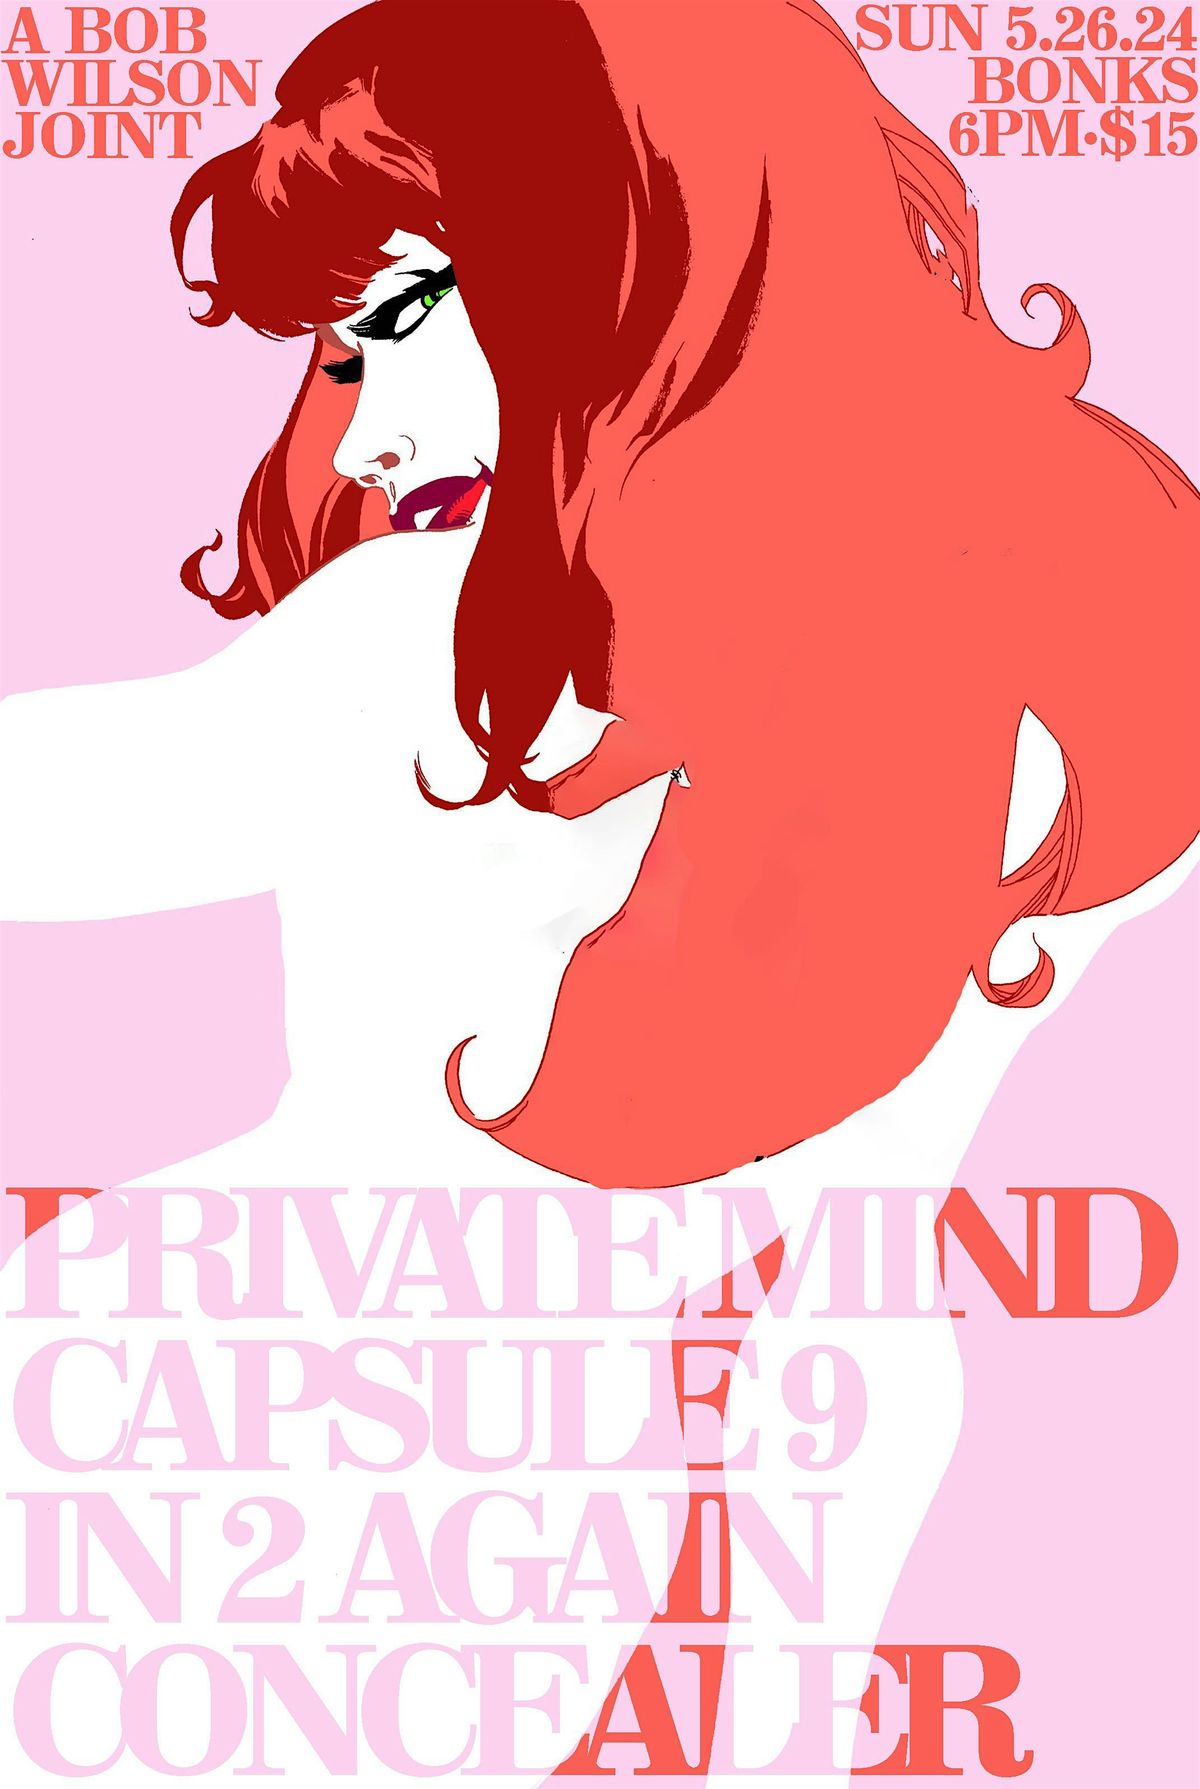 Private Mind\/Capsule 9\/In 2 Again\/Concealer